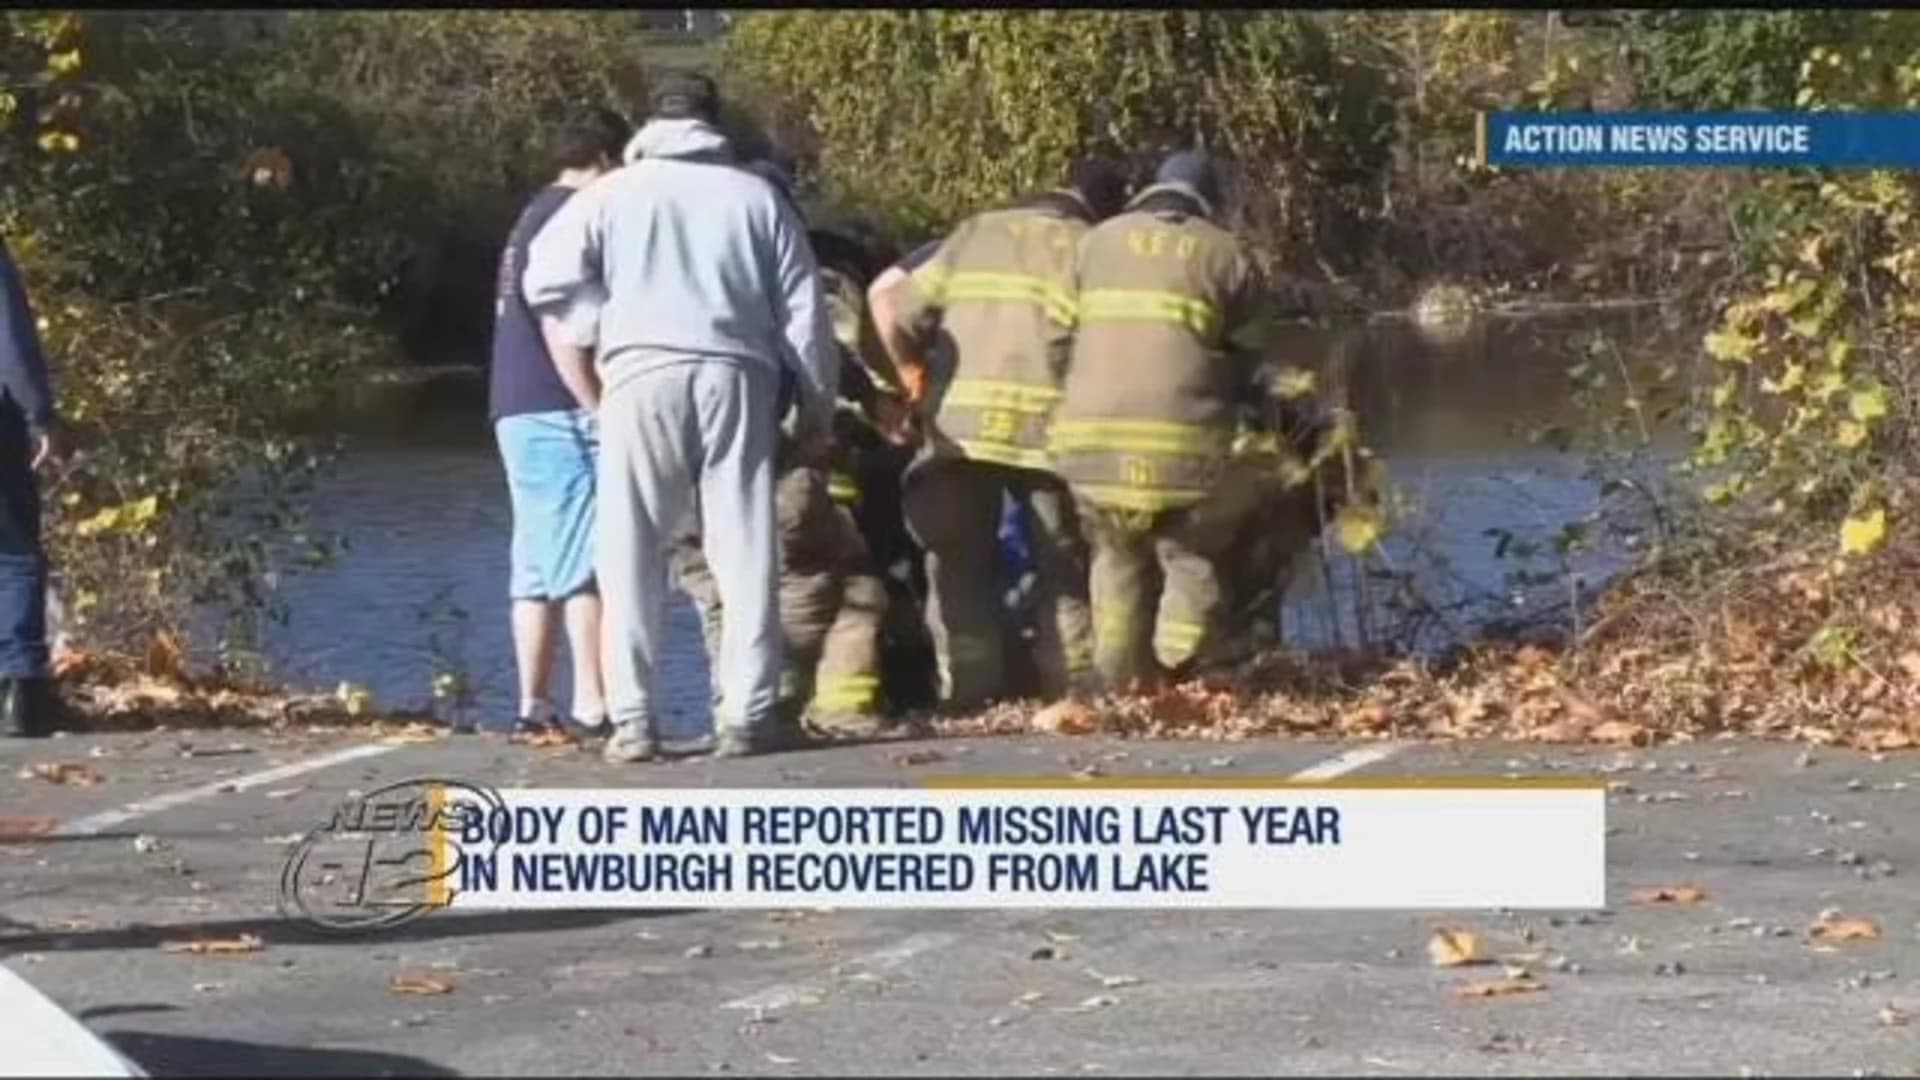 Body of missing elderly man found in Newburgh lake